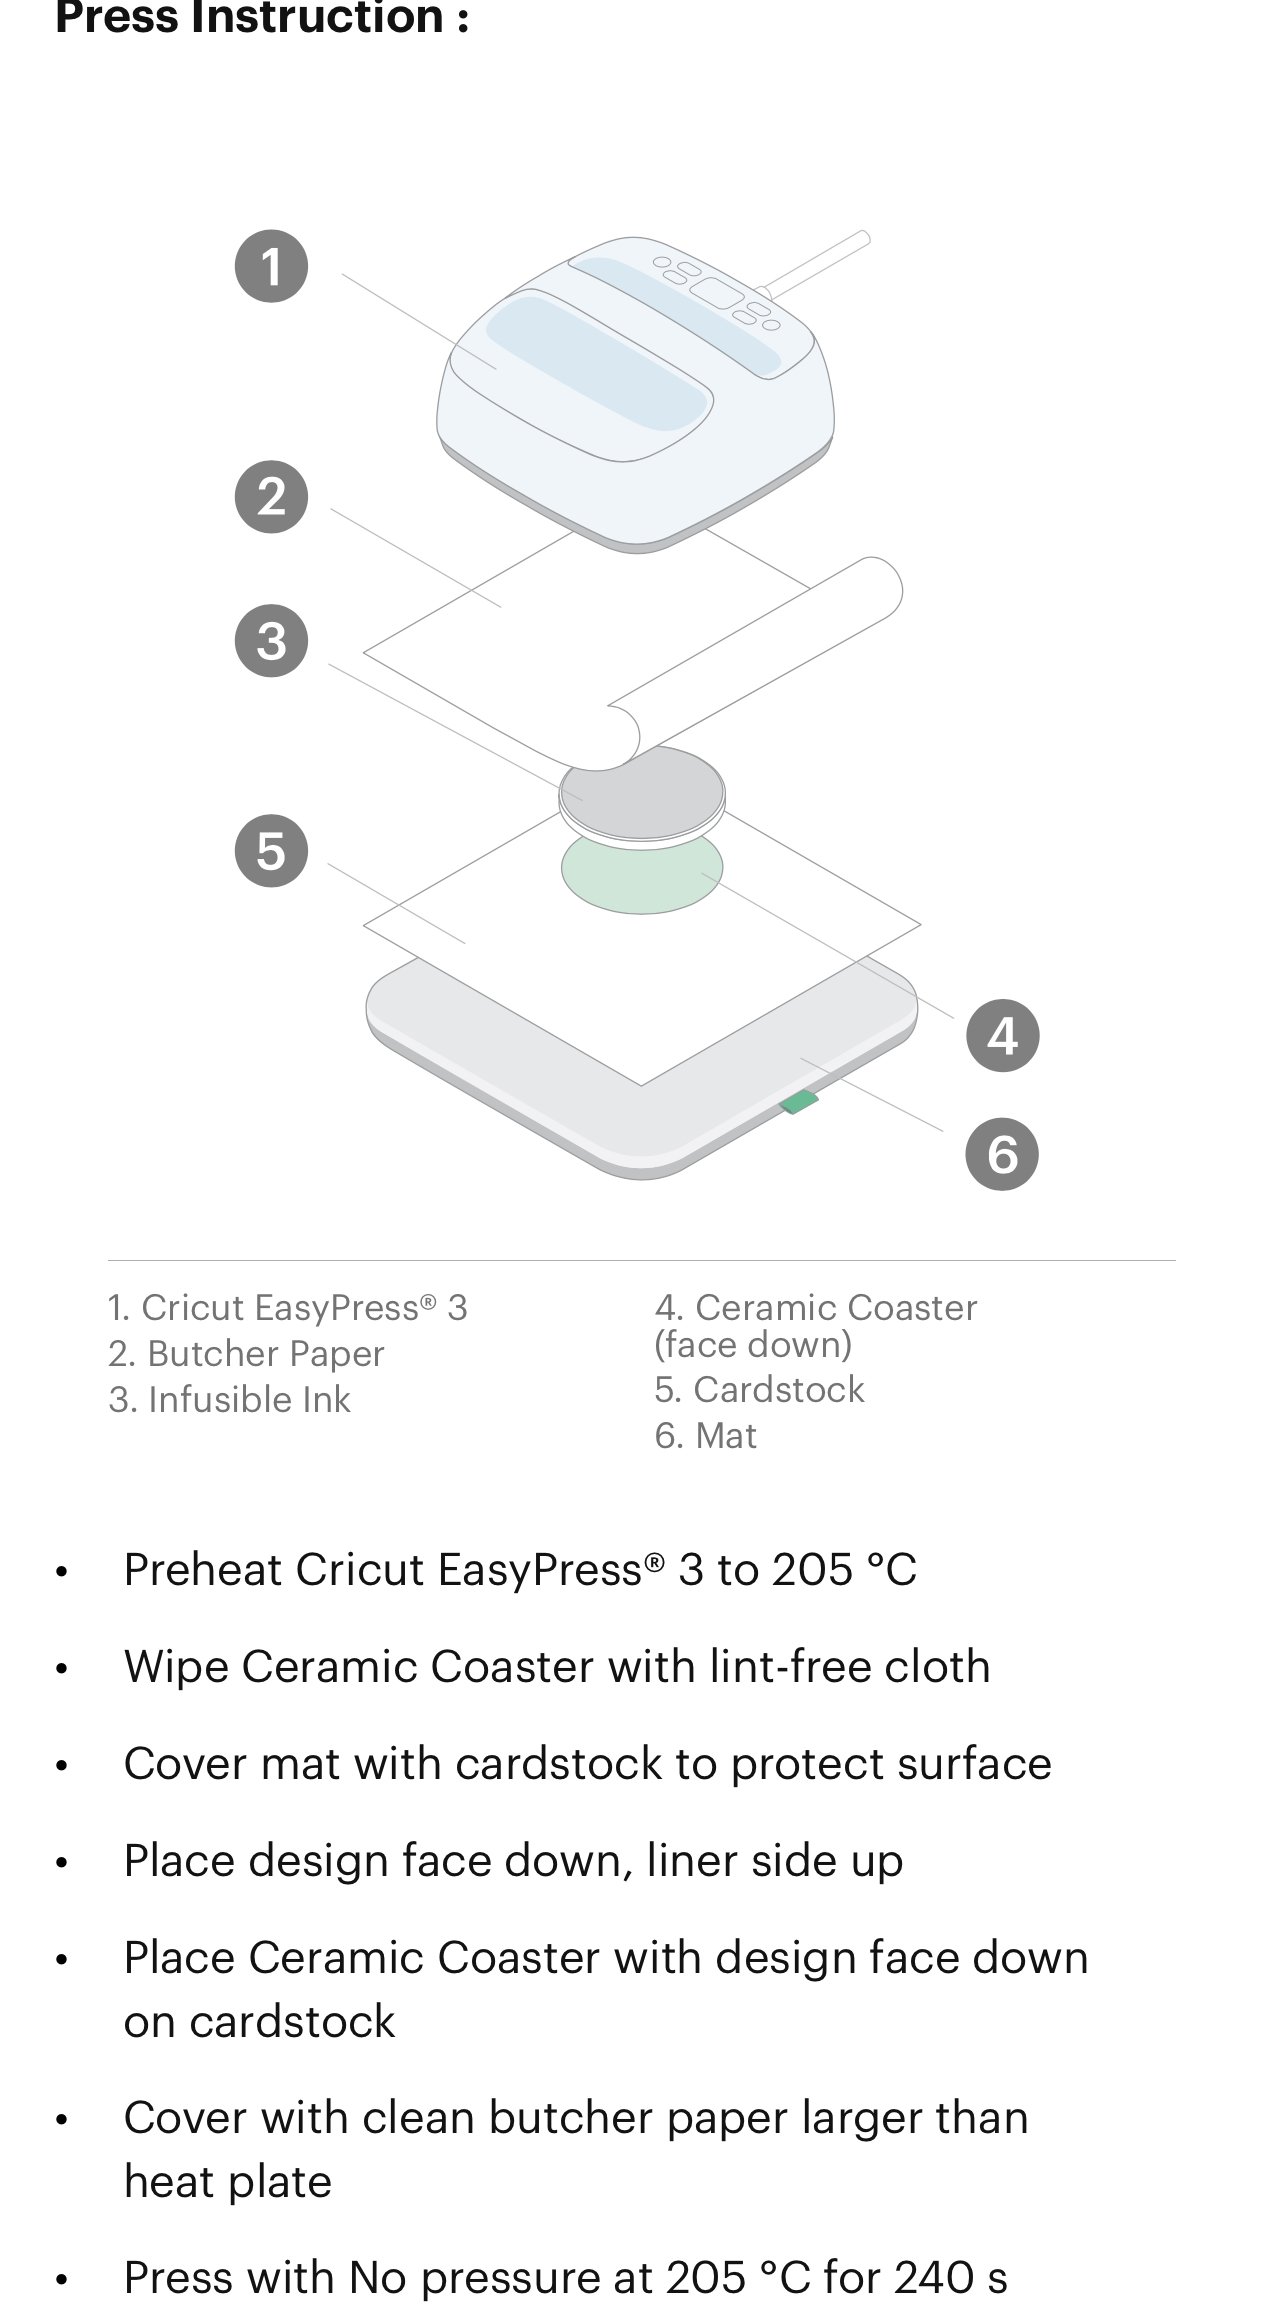 Easy DIY Coasters using Cricut EasyPress 3 — The Learner Observer